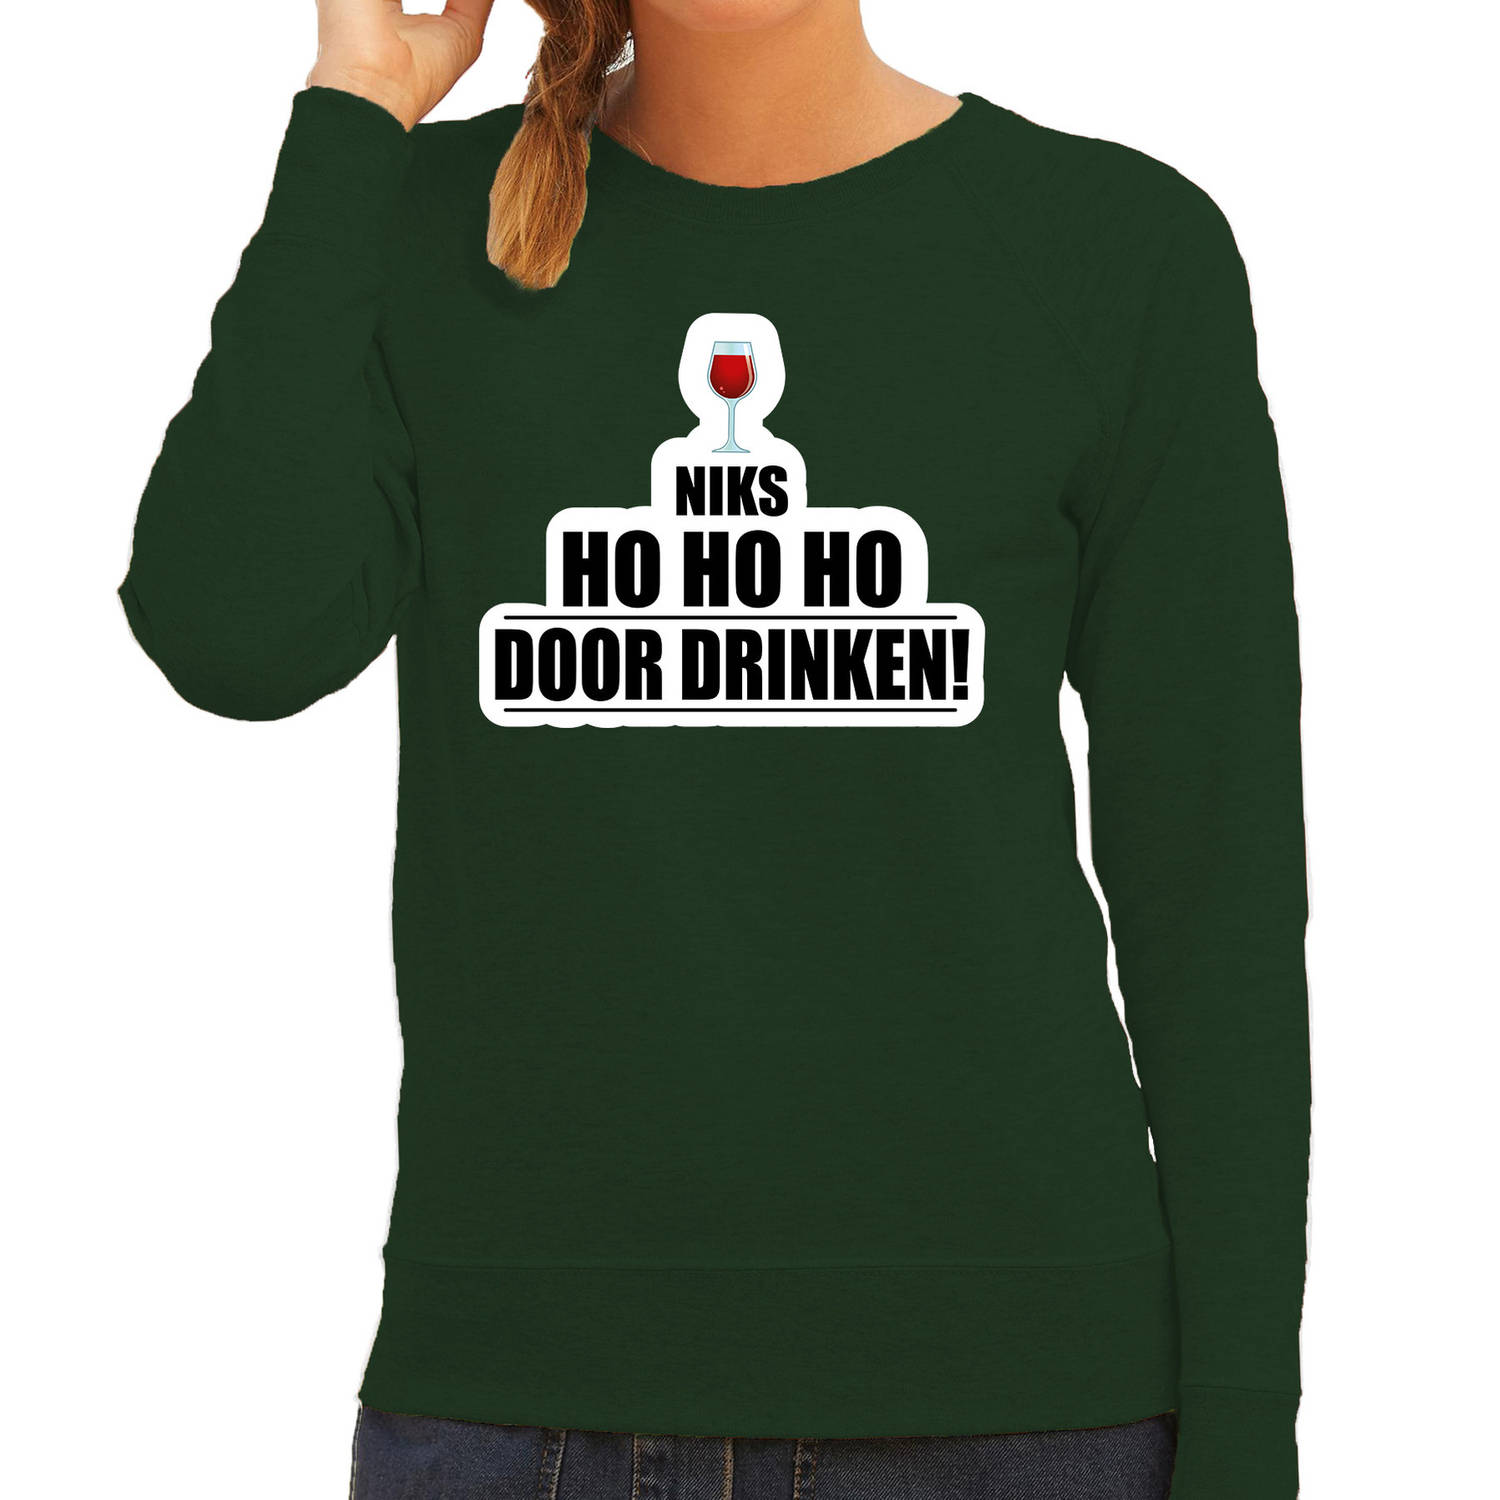 Niks ho ho ho wijn doordrinken foute Kerstsweater / Kersttrui groen voor dames L - kerst truien